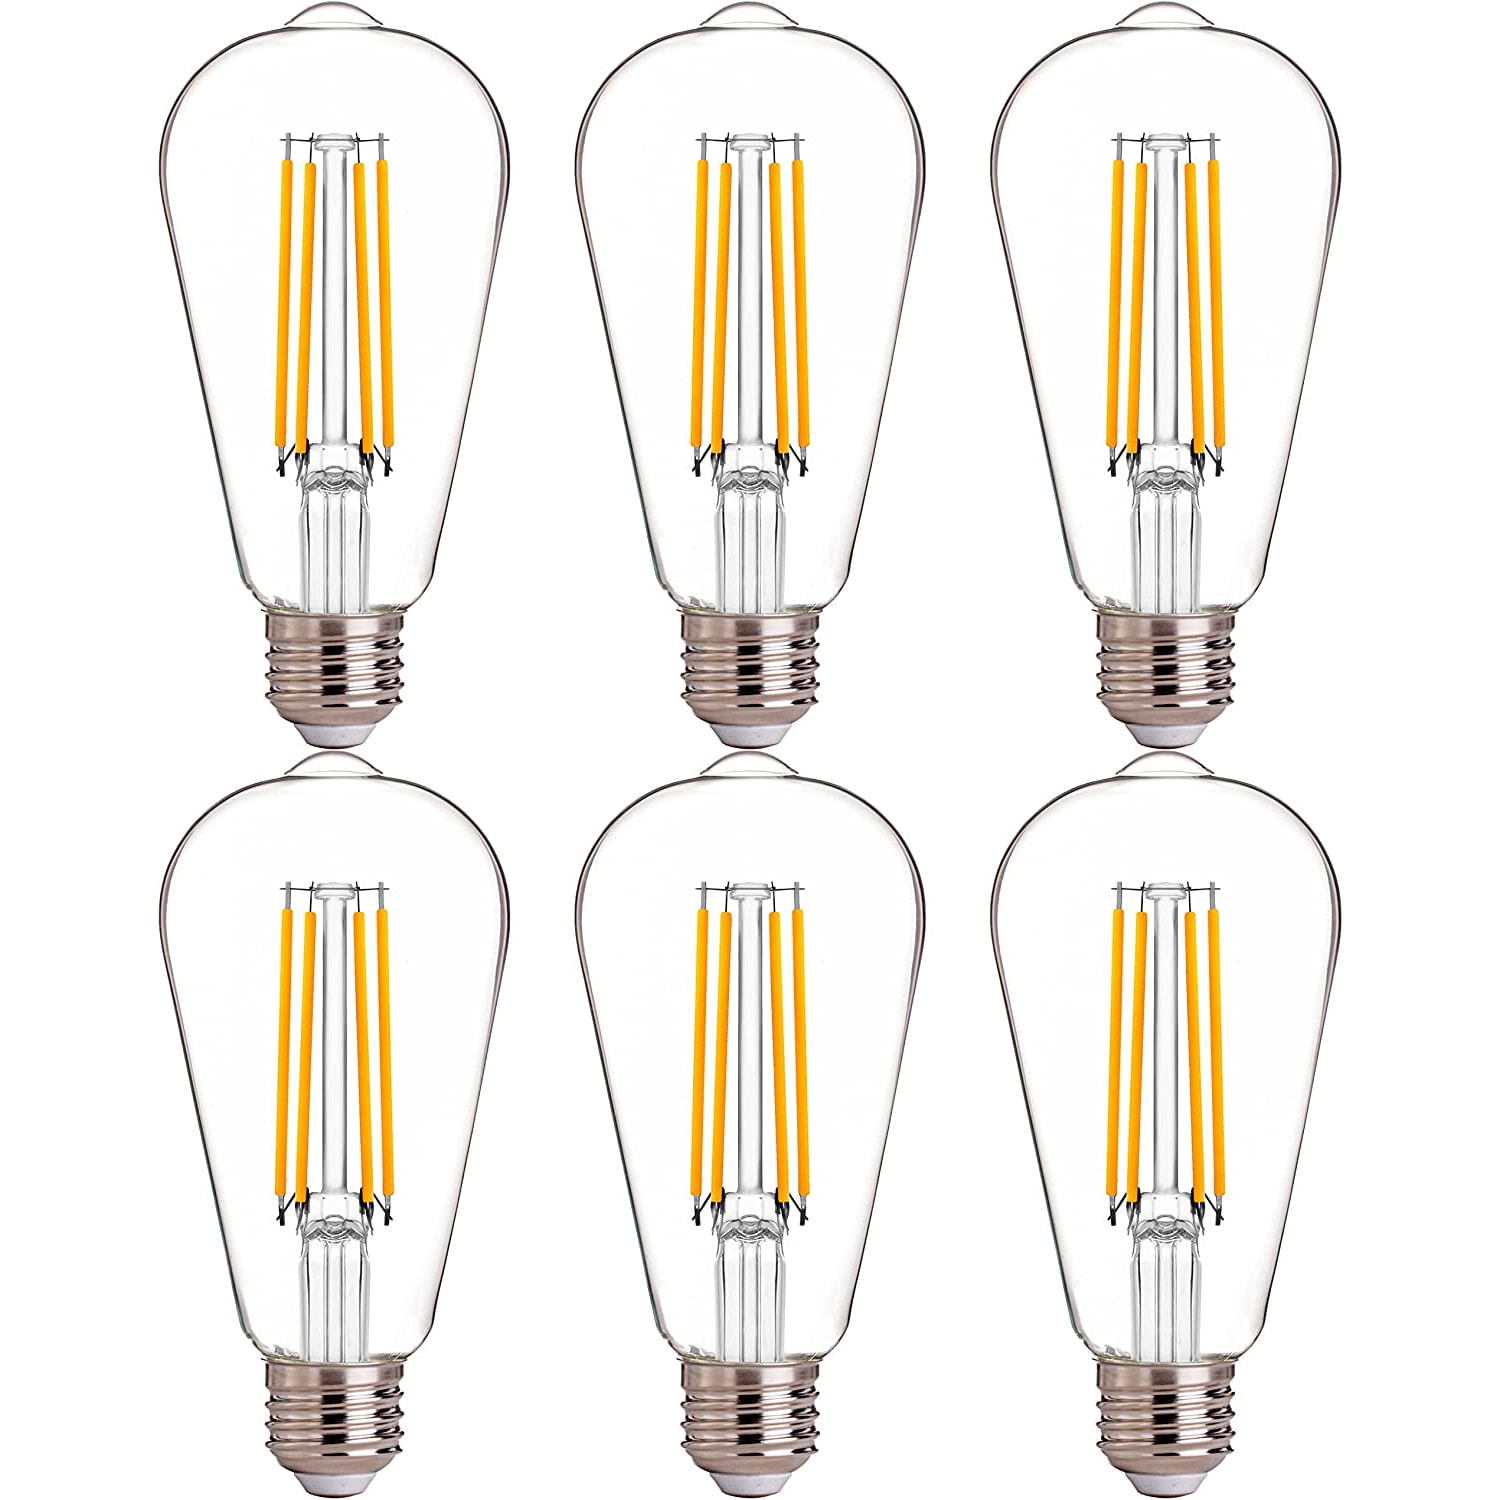 FLSNT Light Bulbs at